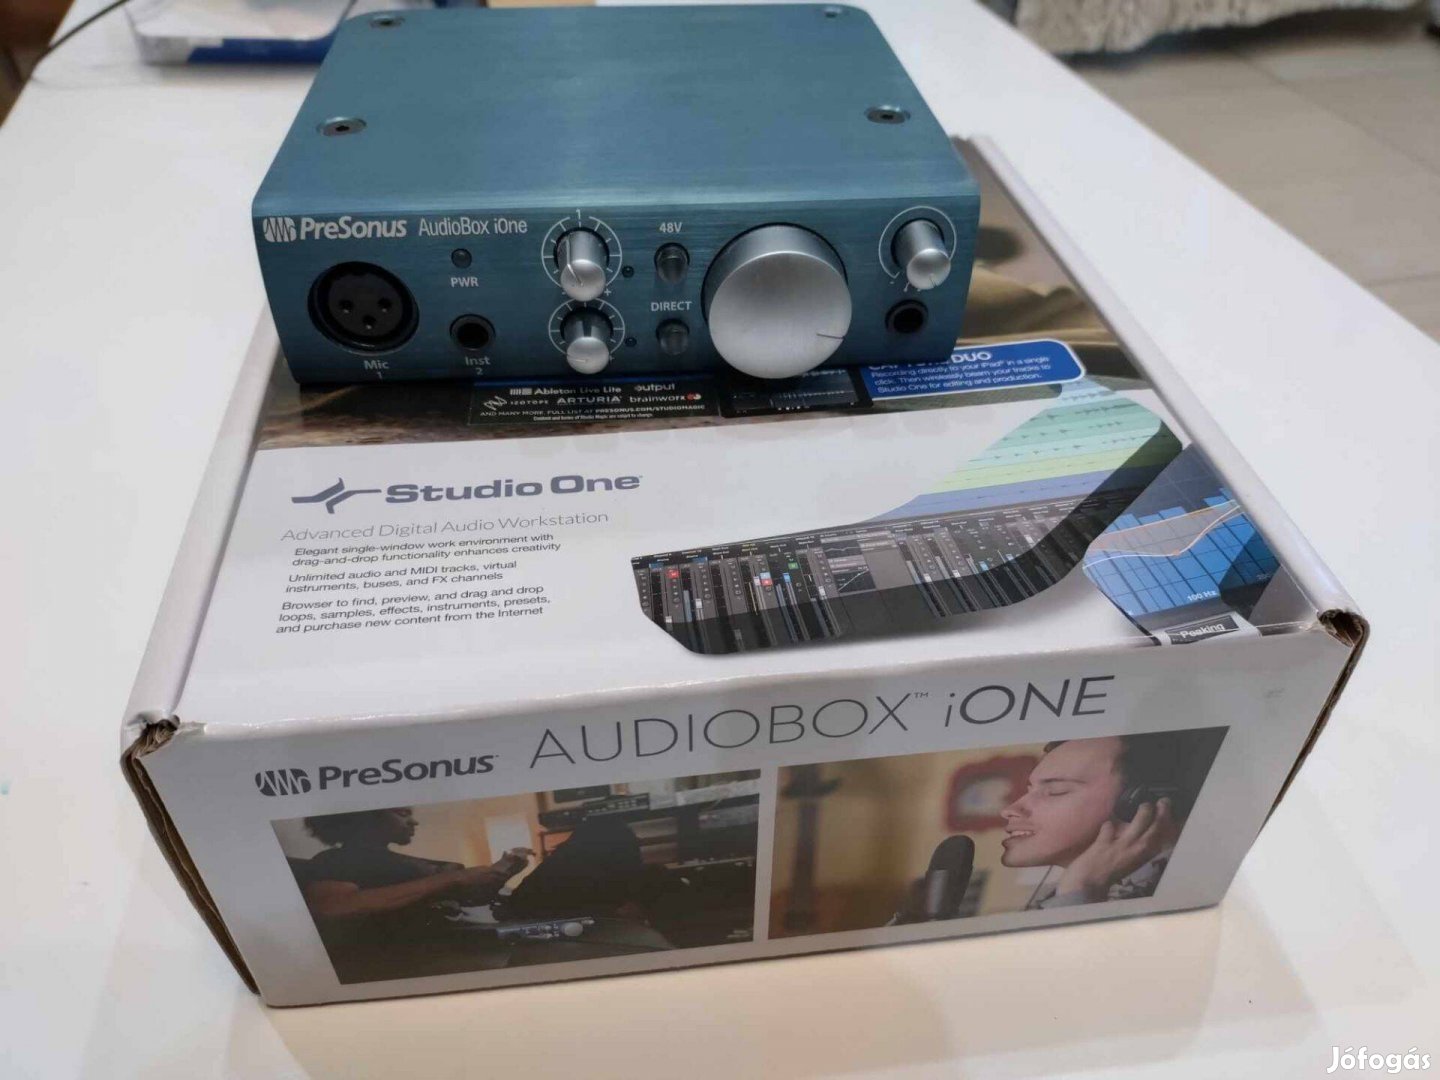 Presonus Audiobox ione audio interface